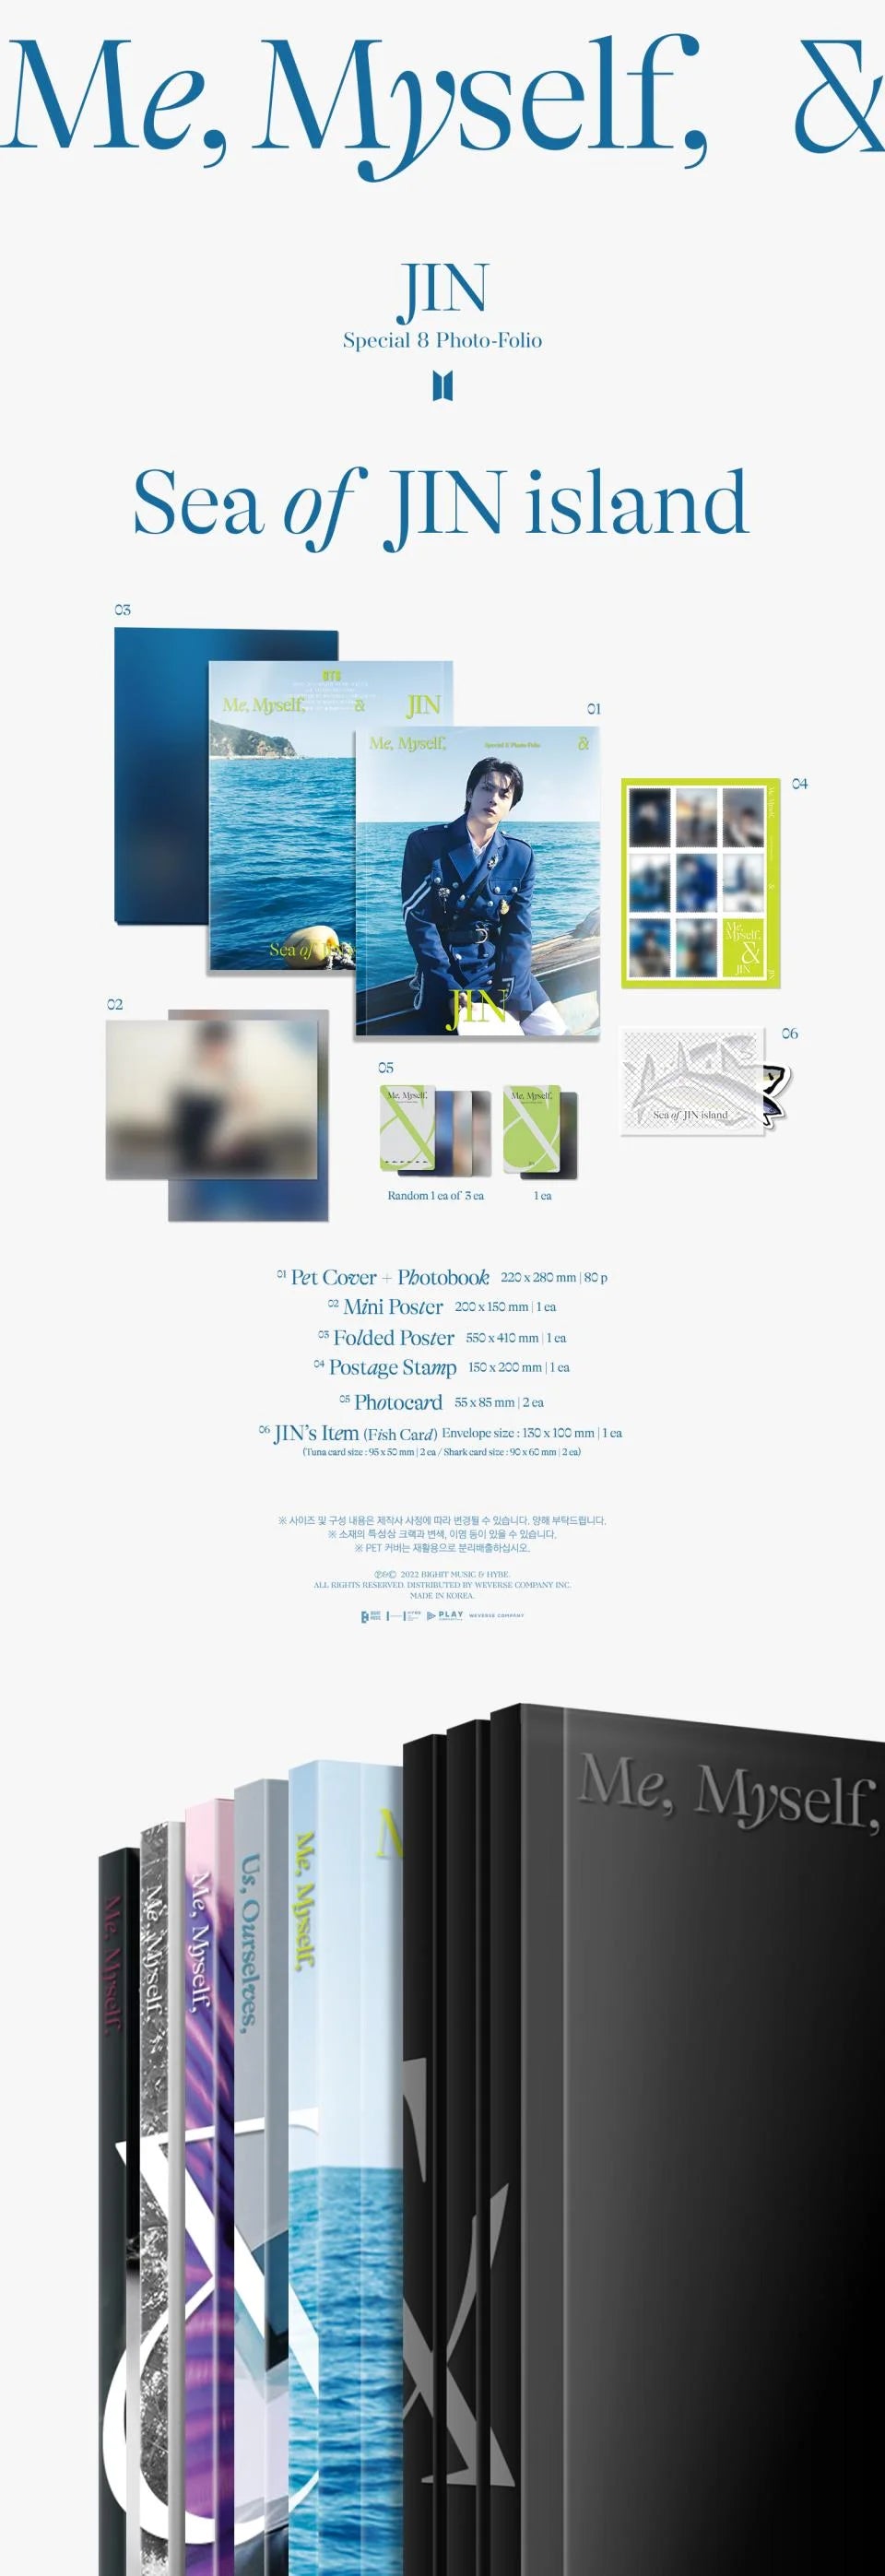 Special 8 Photo-Folio Me, Myself, and and Jin (‘Sea of JIN island’) | The Daebak Company